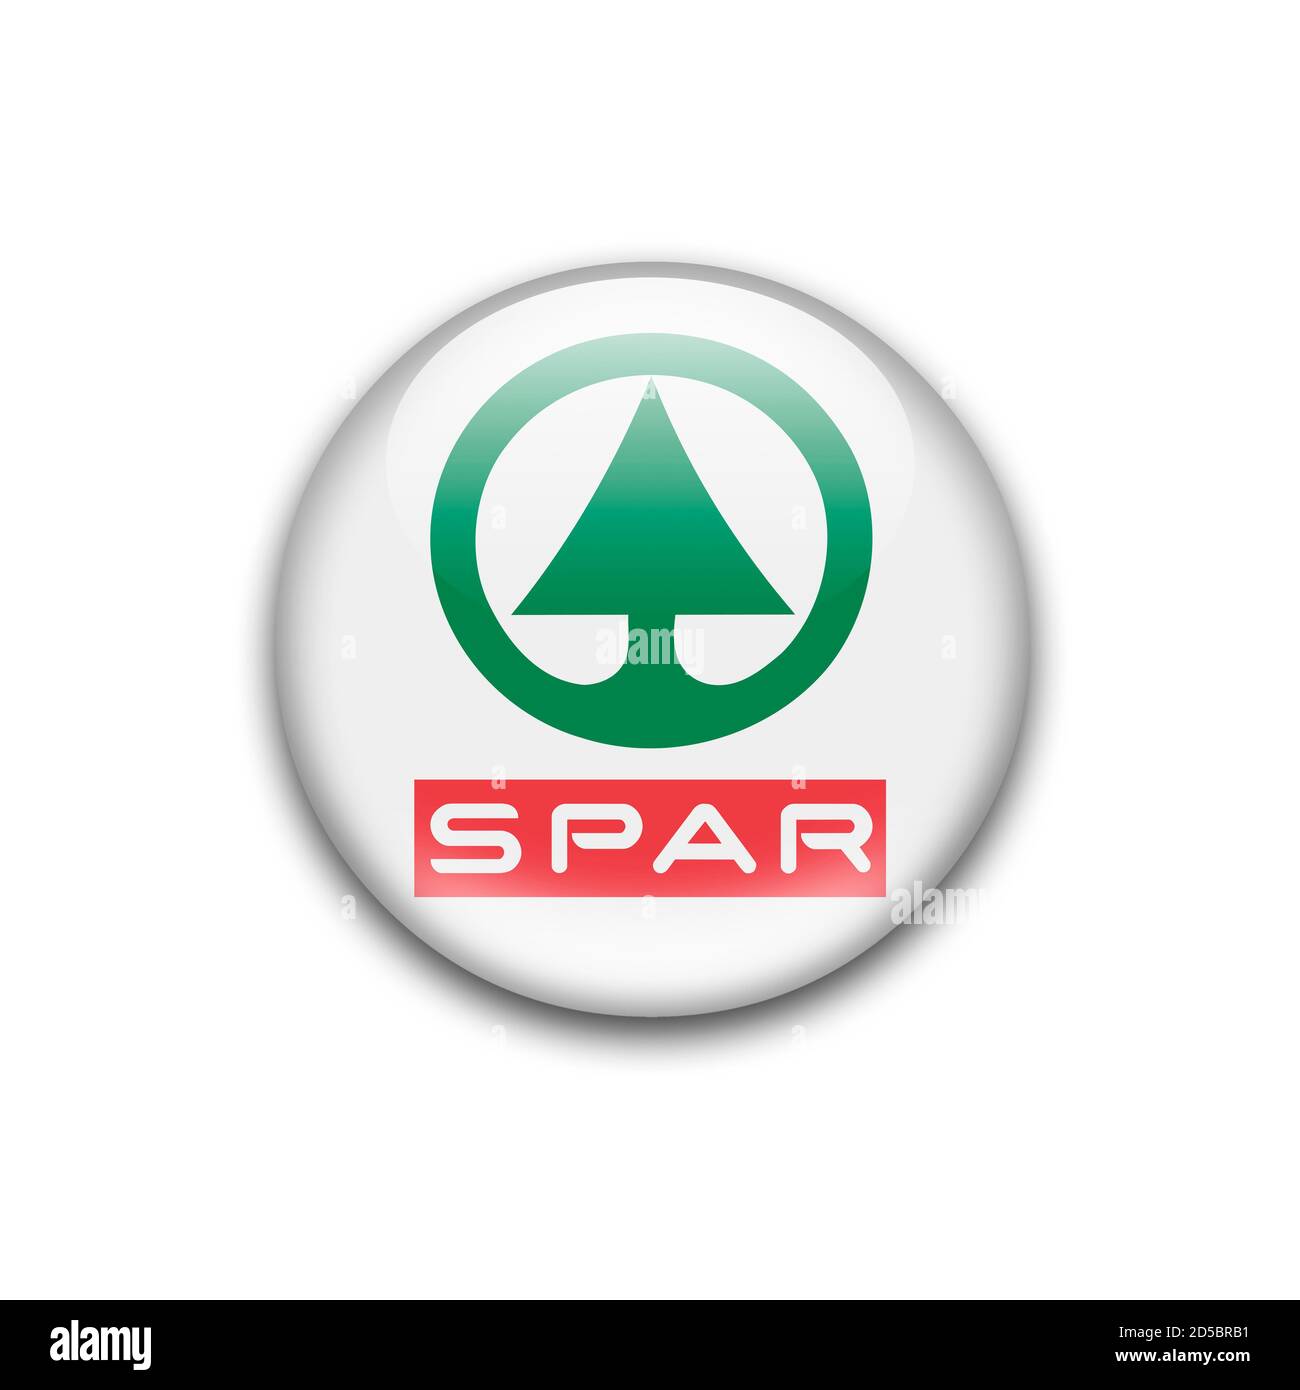 Spar market logo Stock Photo